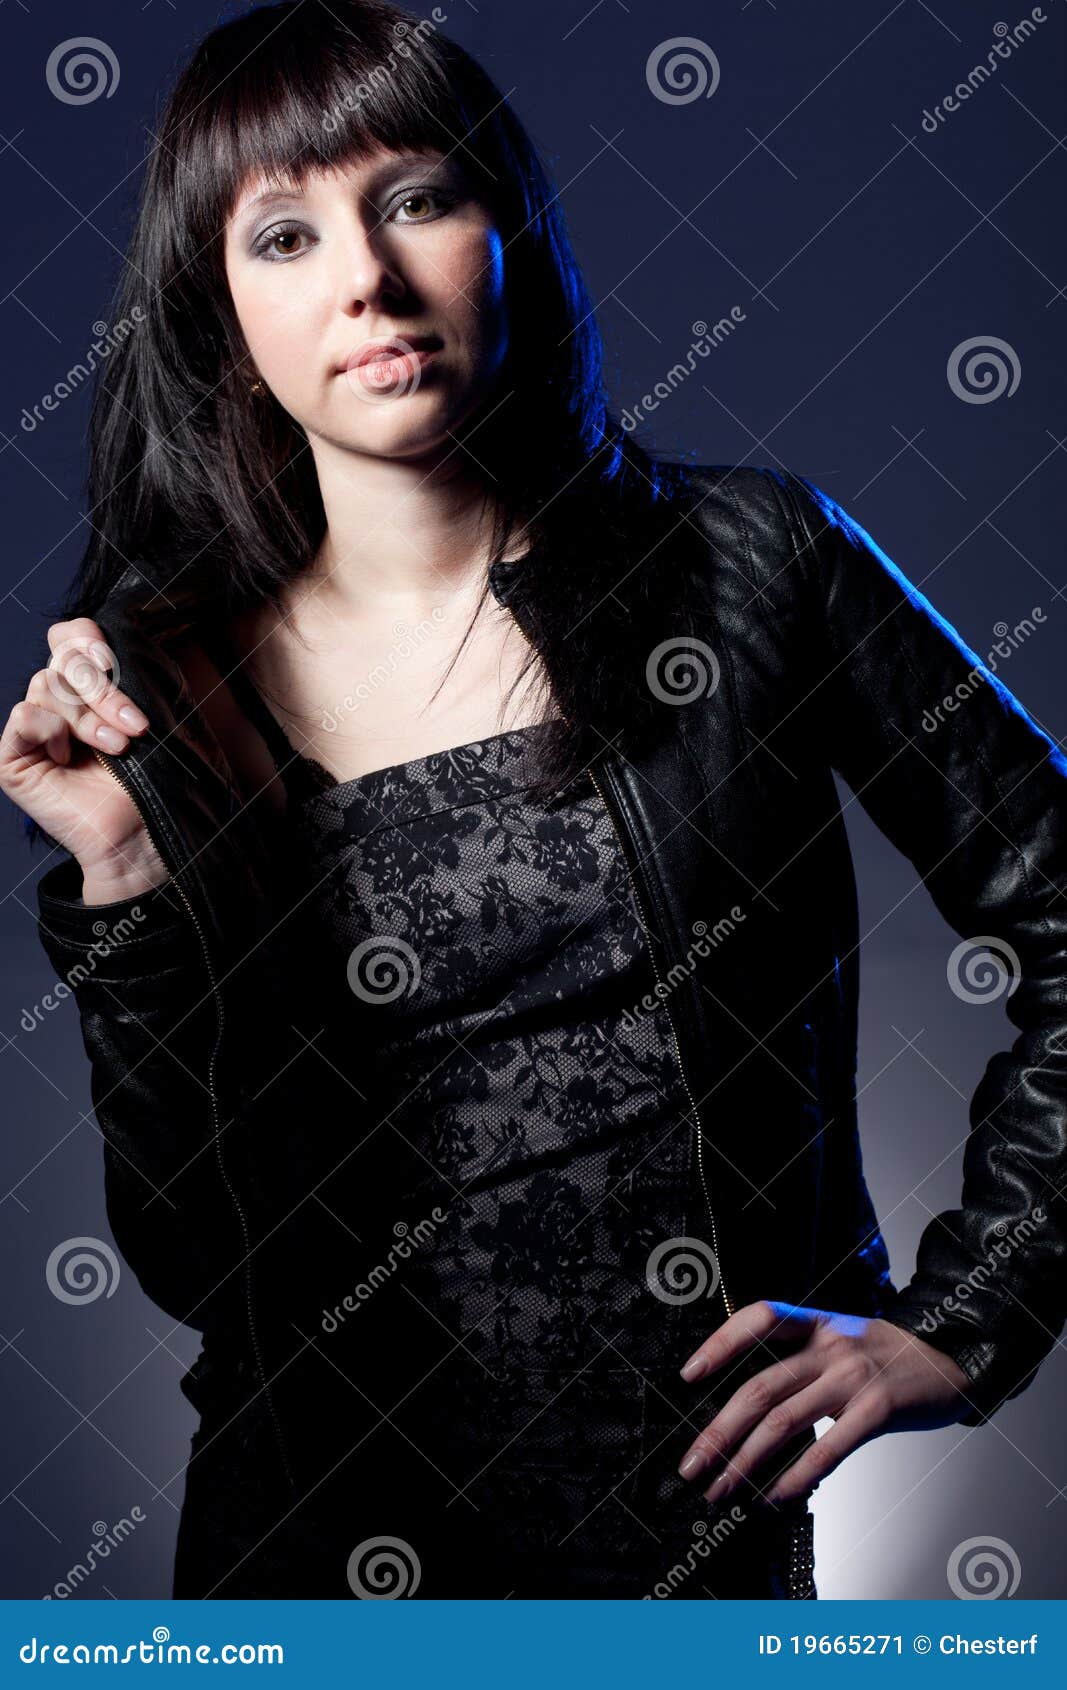 Woman Wearing Leather Jacket Stock Image - Image of posing, hair: 19665271